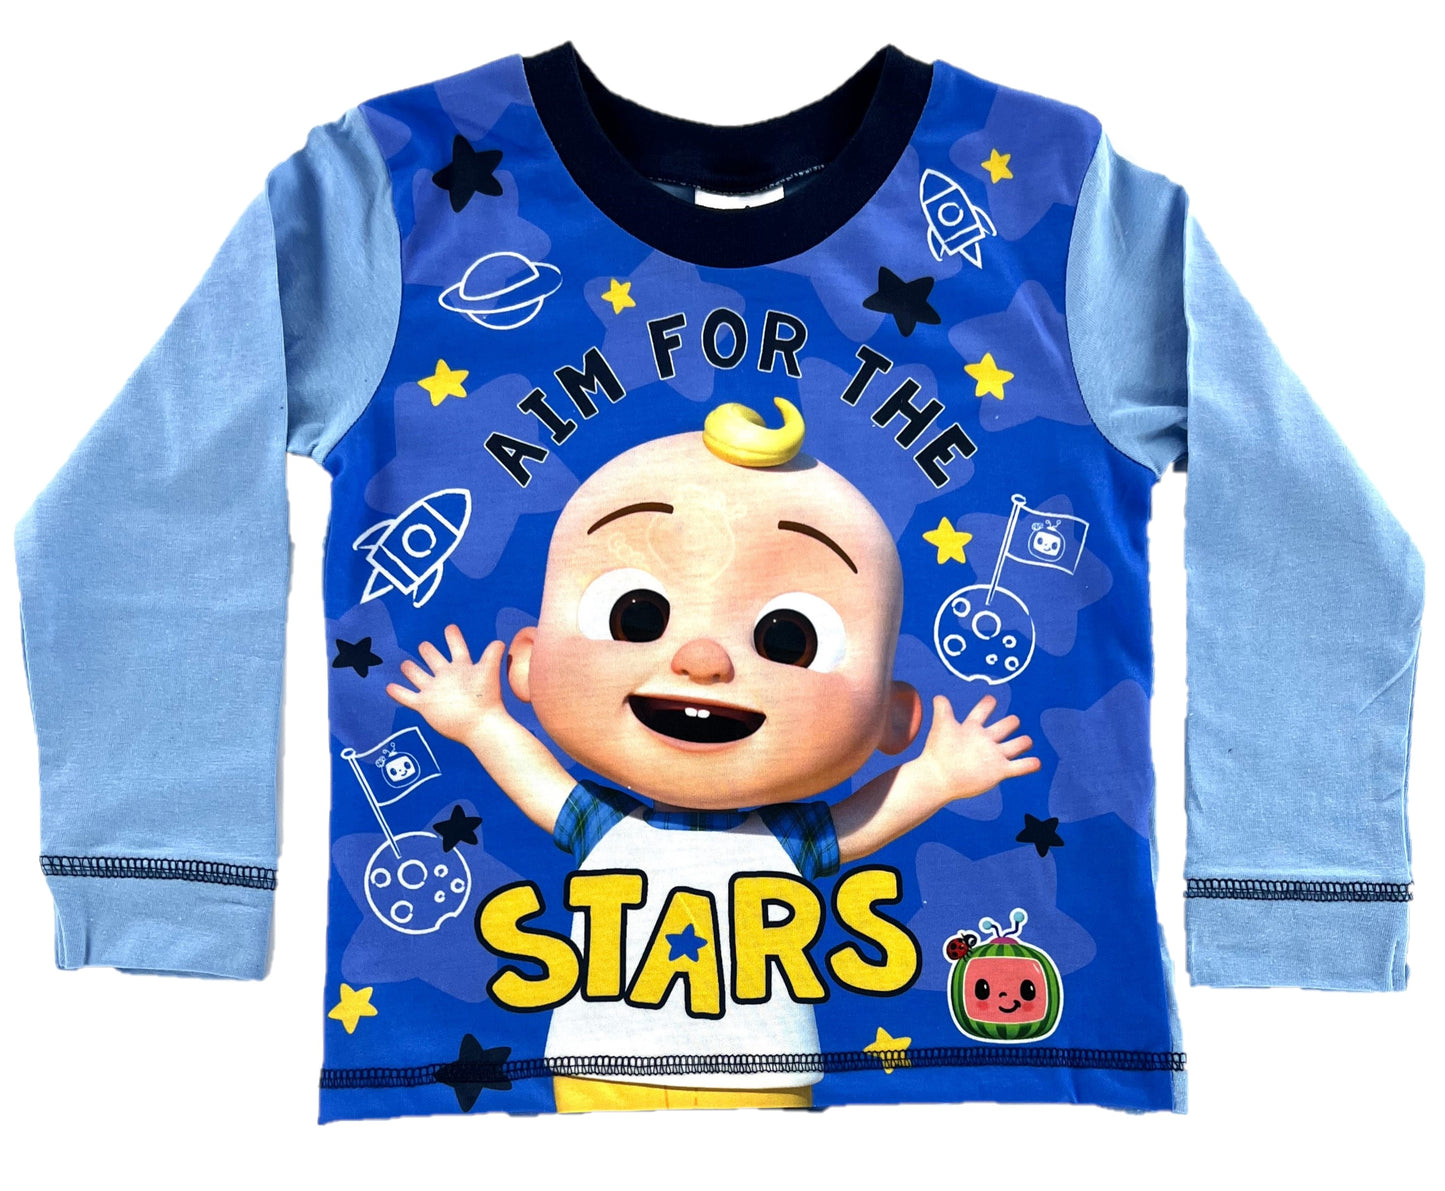 Cocomelon Boys Pyjamas “Stars” 1-4 Years, Great Gift Idea